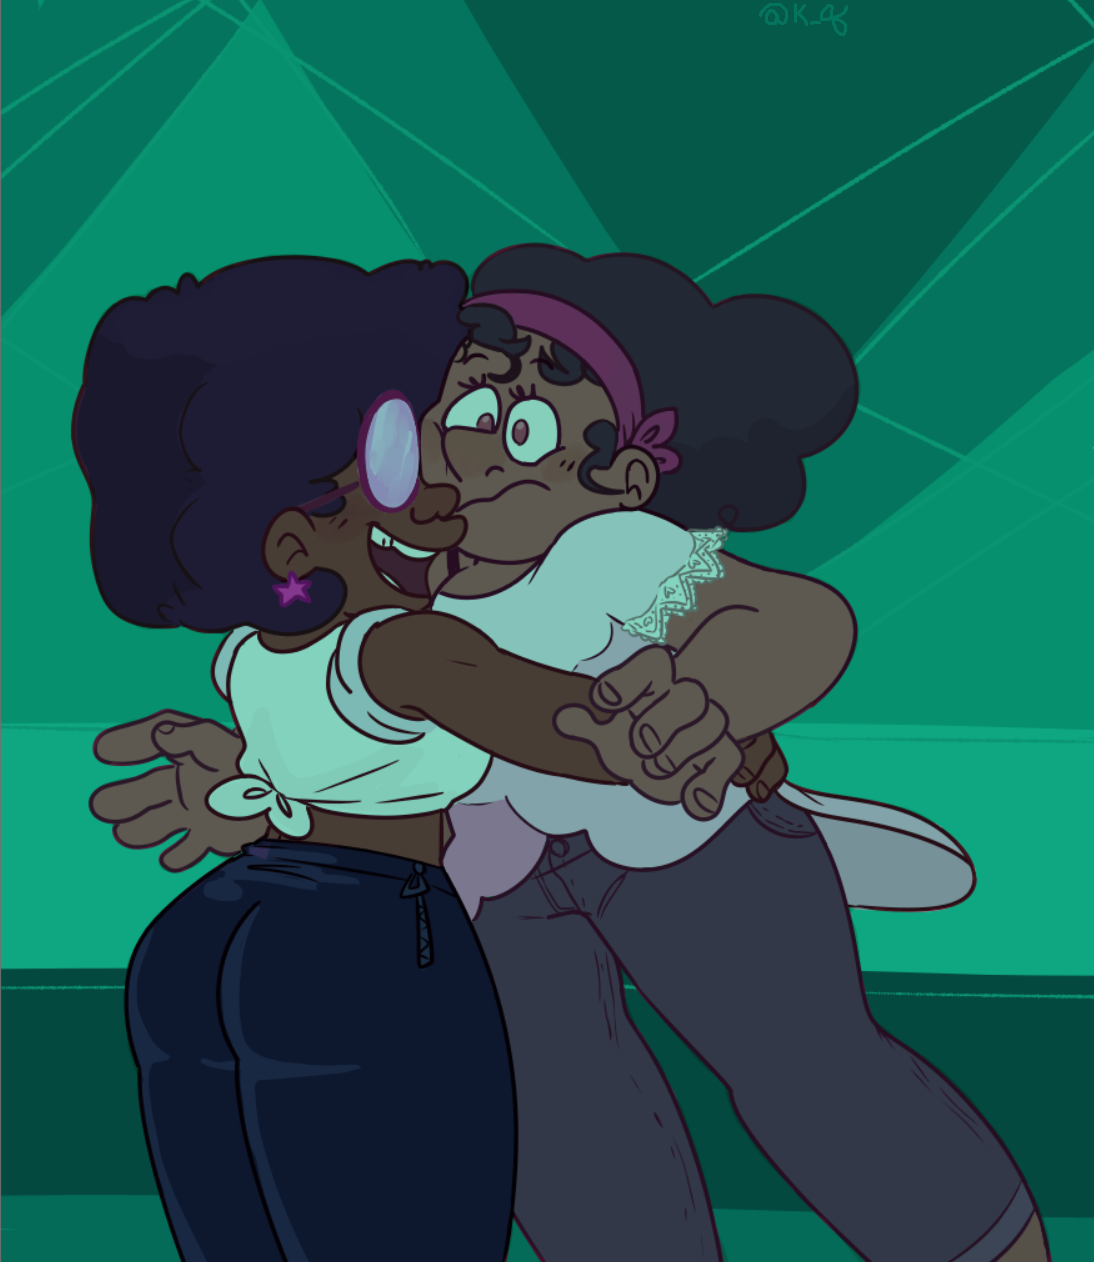 kenz-quartz: This definitely made me scream a little when Garnet hugged Rhodonite!